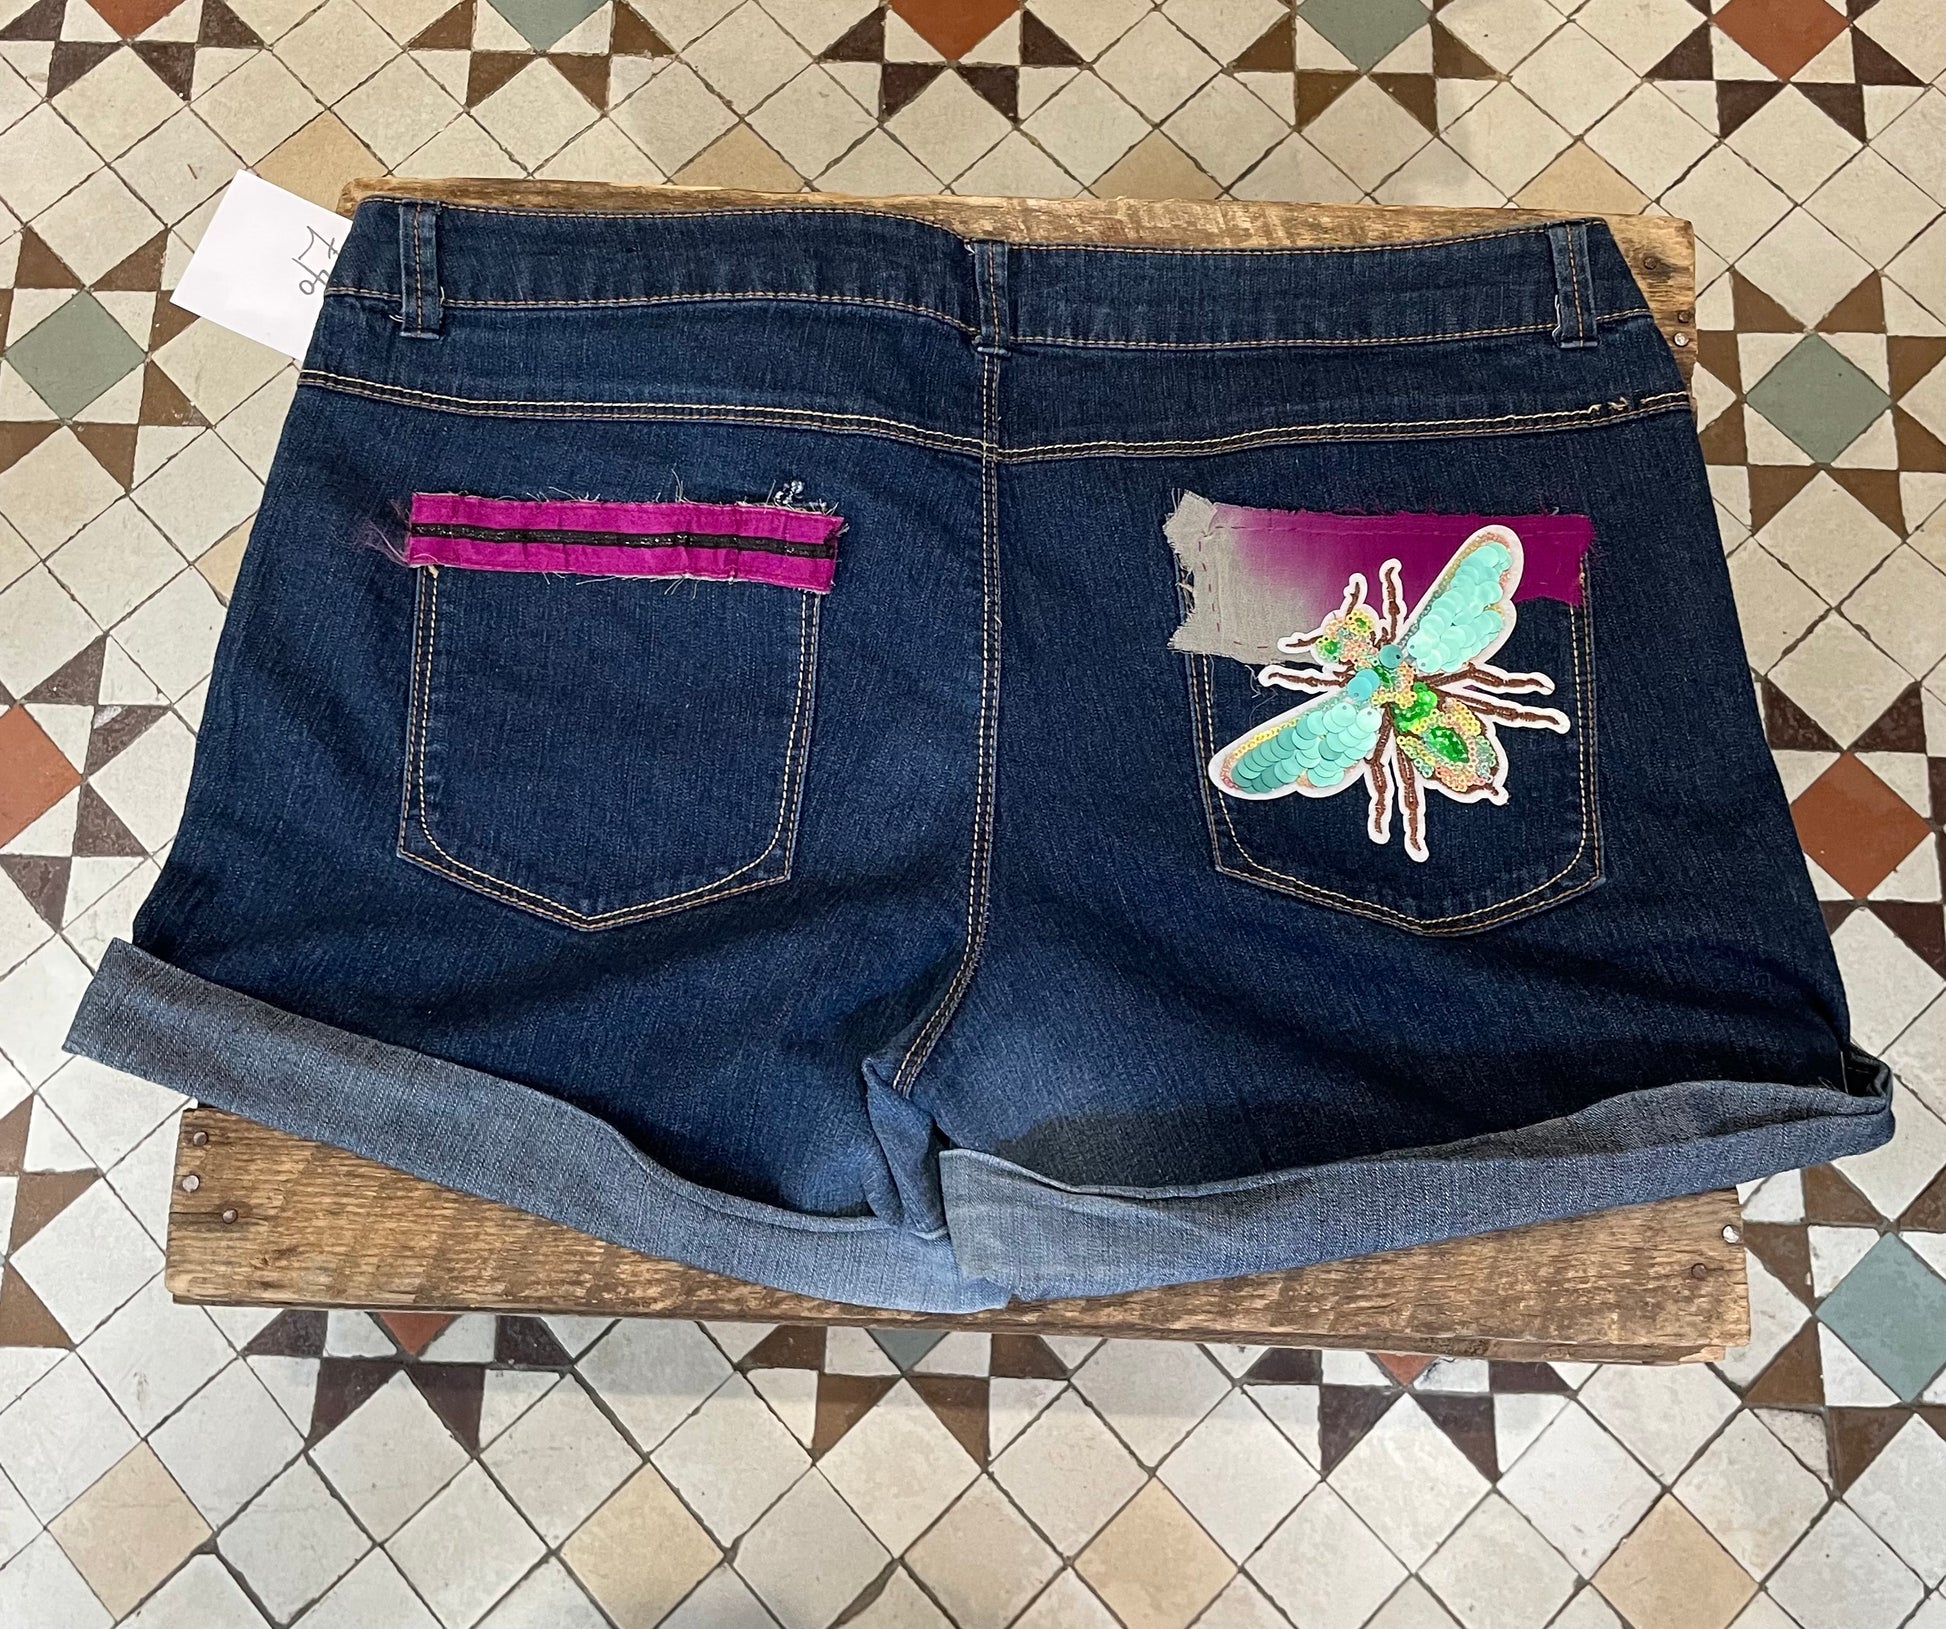 Upcycled Denim Shorts from mpira.